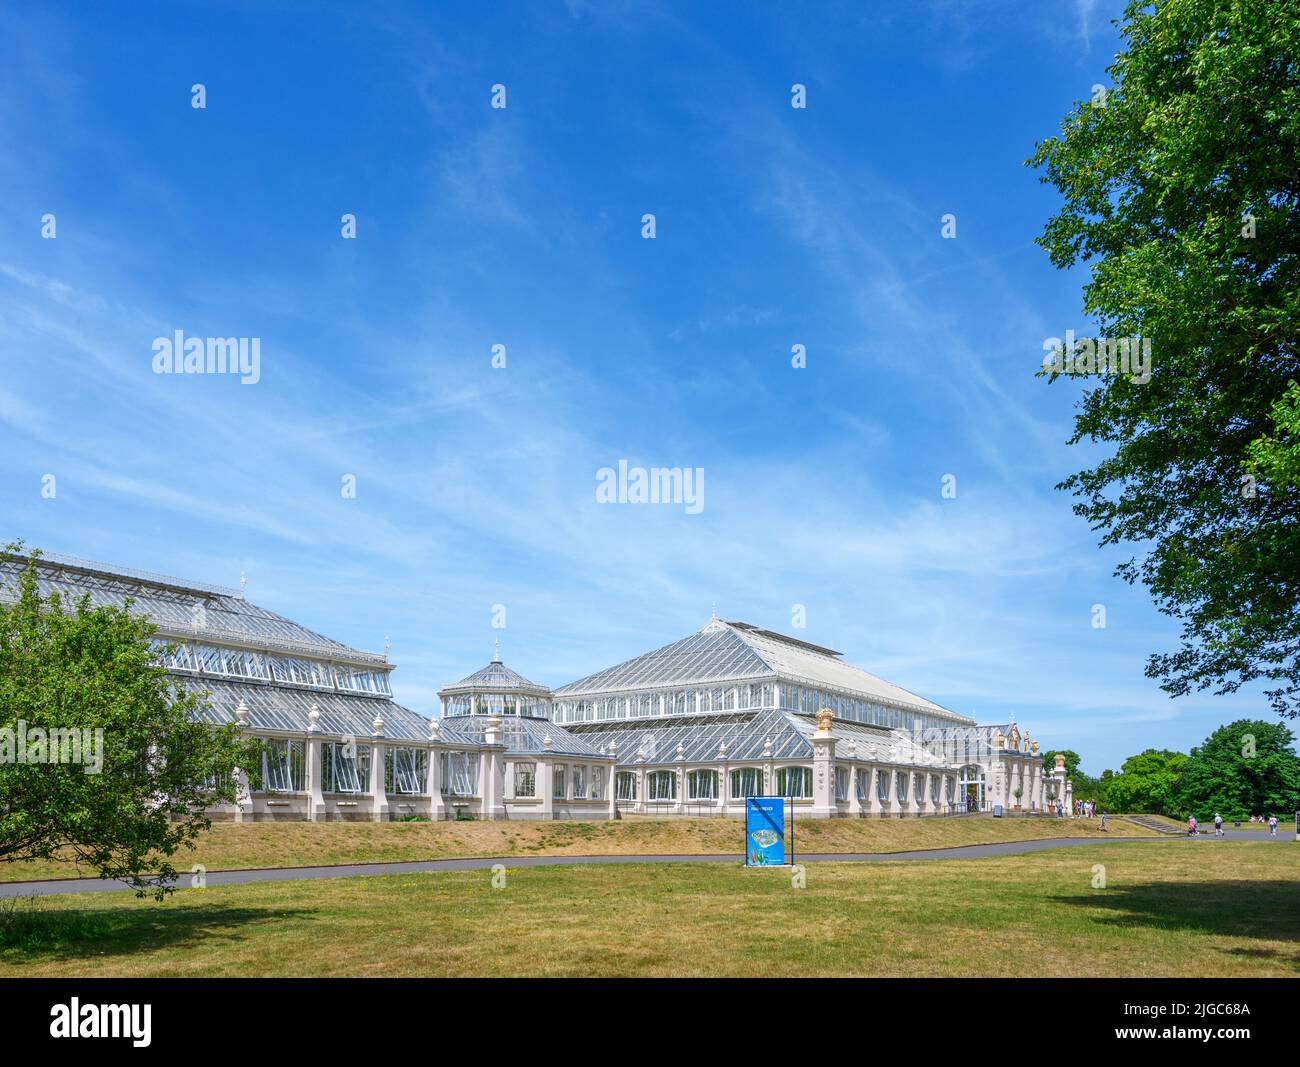 La casa de las templadas, Kew Gardens, Richmond, Londres, Inglaterra, REINO UNIDO Foto de stock